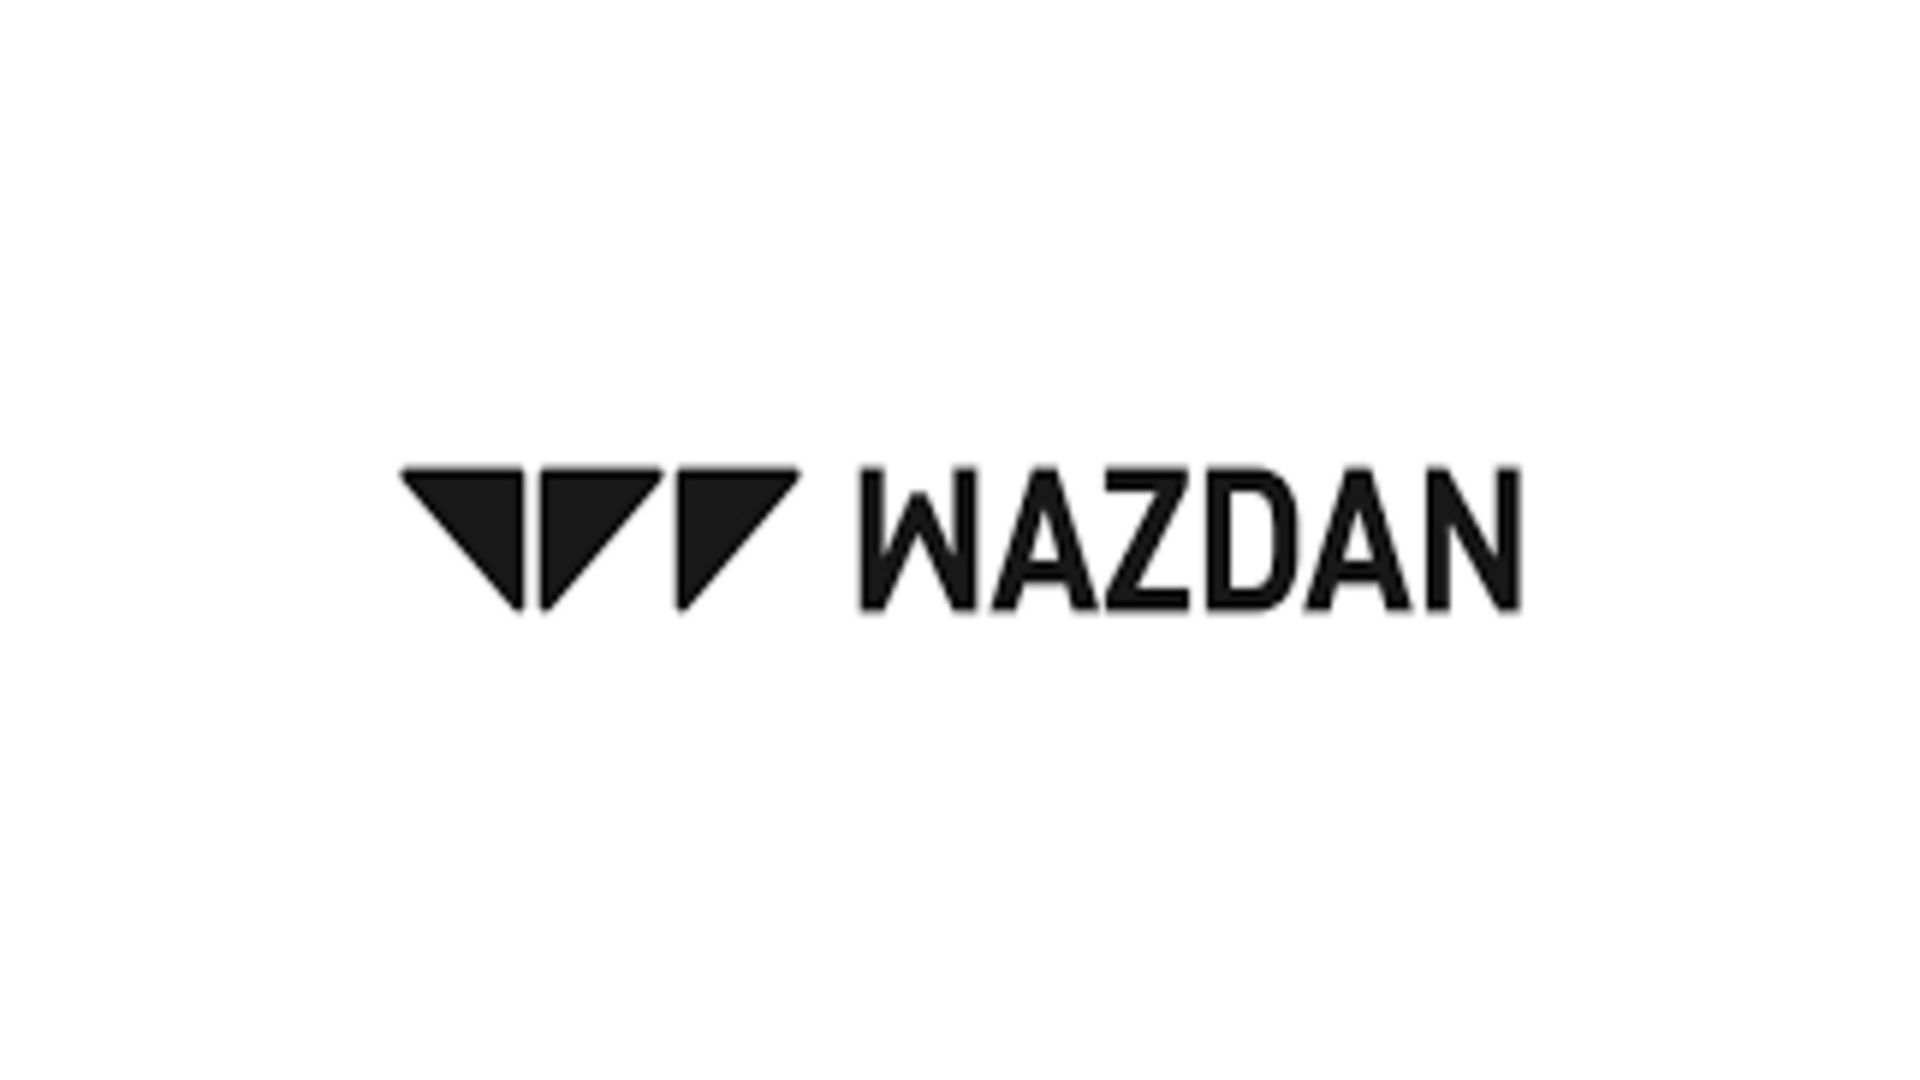 Wazdan Online Slot iGaming Provider